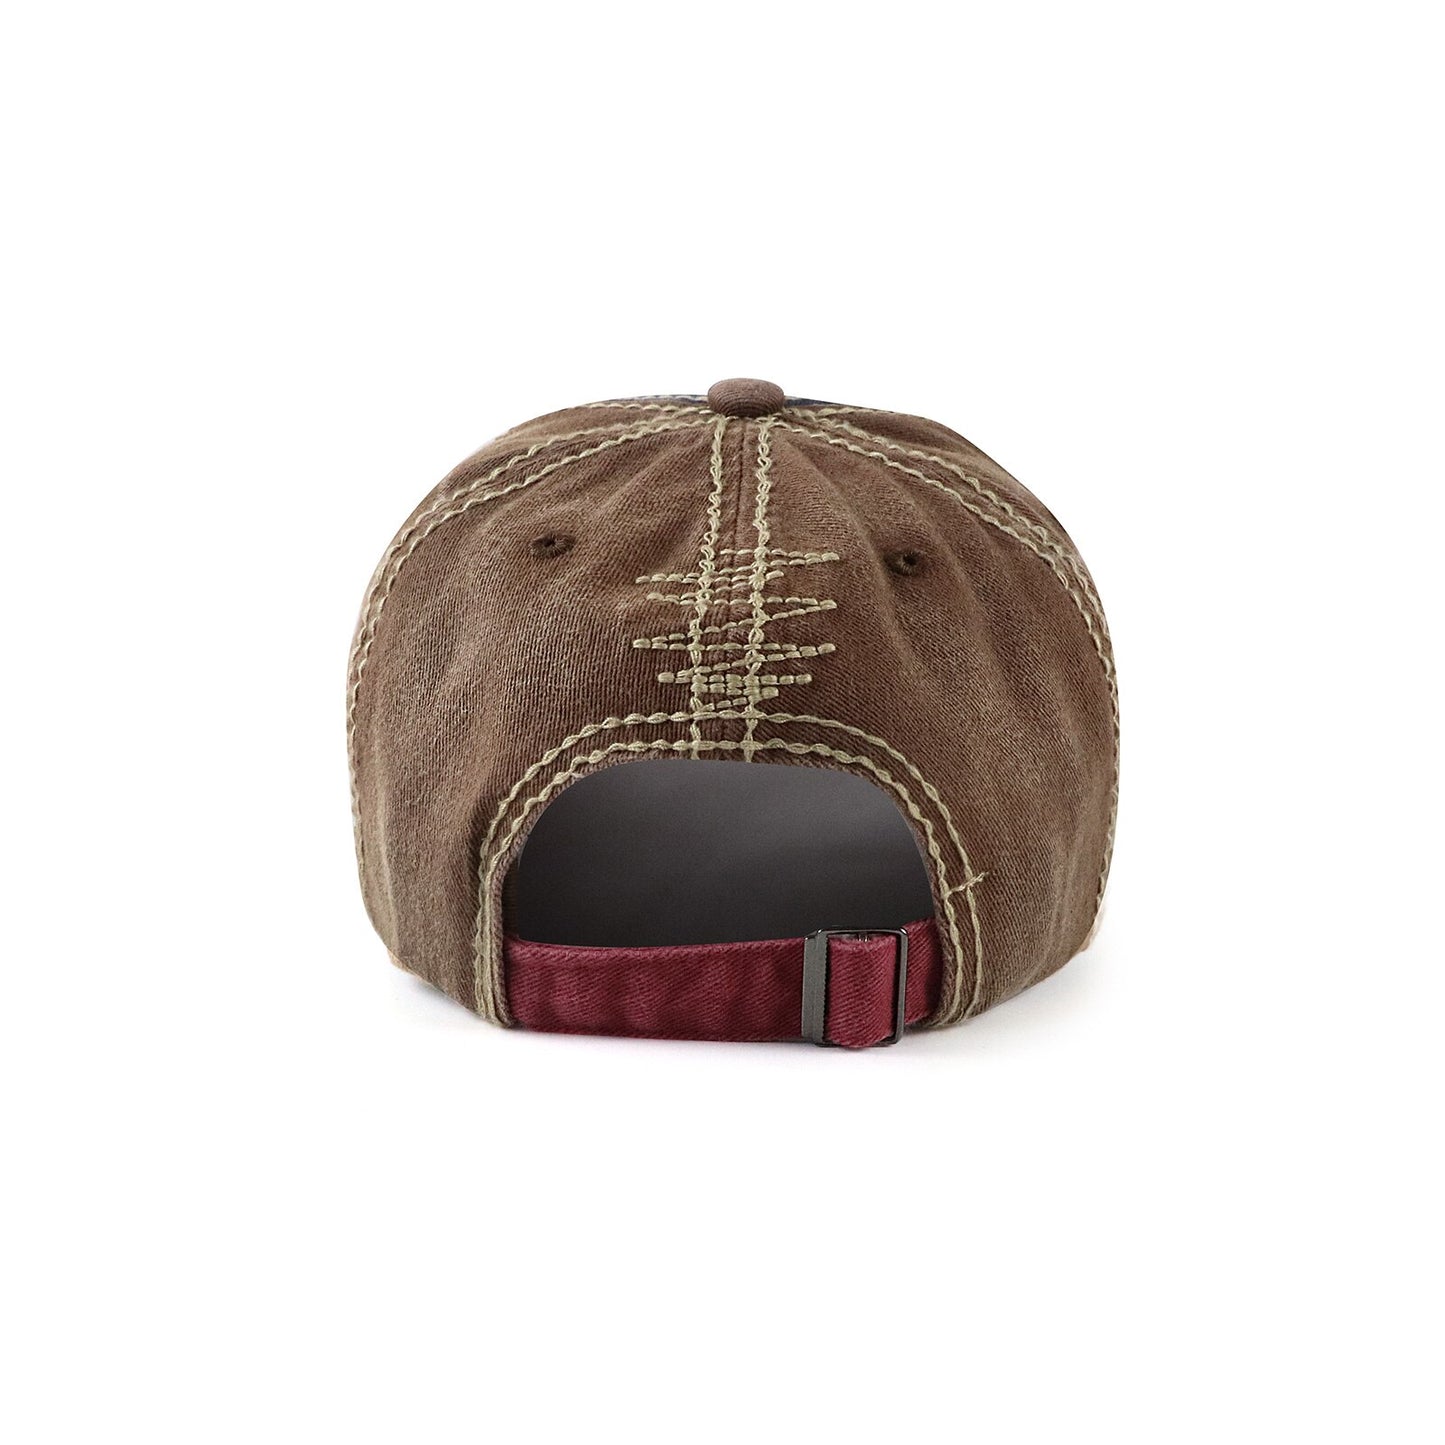 ZLEEVO Embroidery Trucker Hat Cotton Baseball Caps Fashion Matching Snapback Hats Outdoor Sports Caps Casquette Hat bone cap